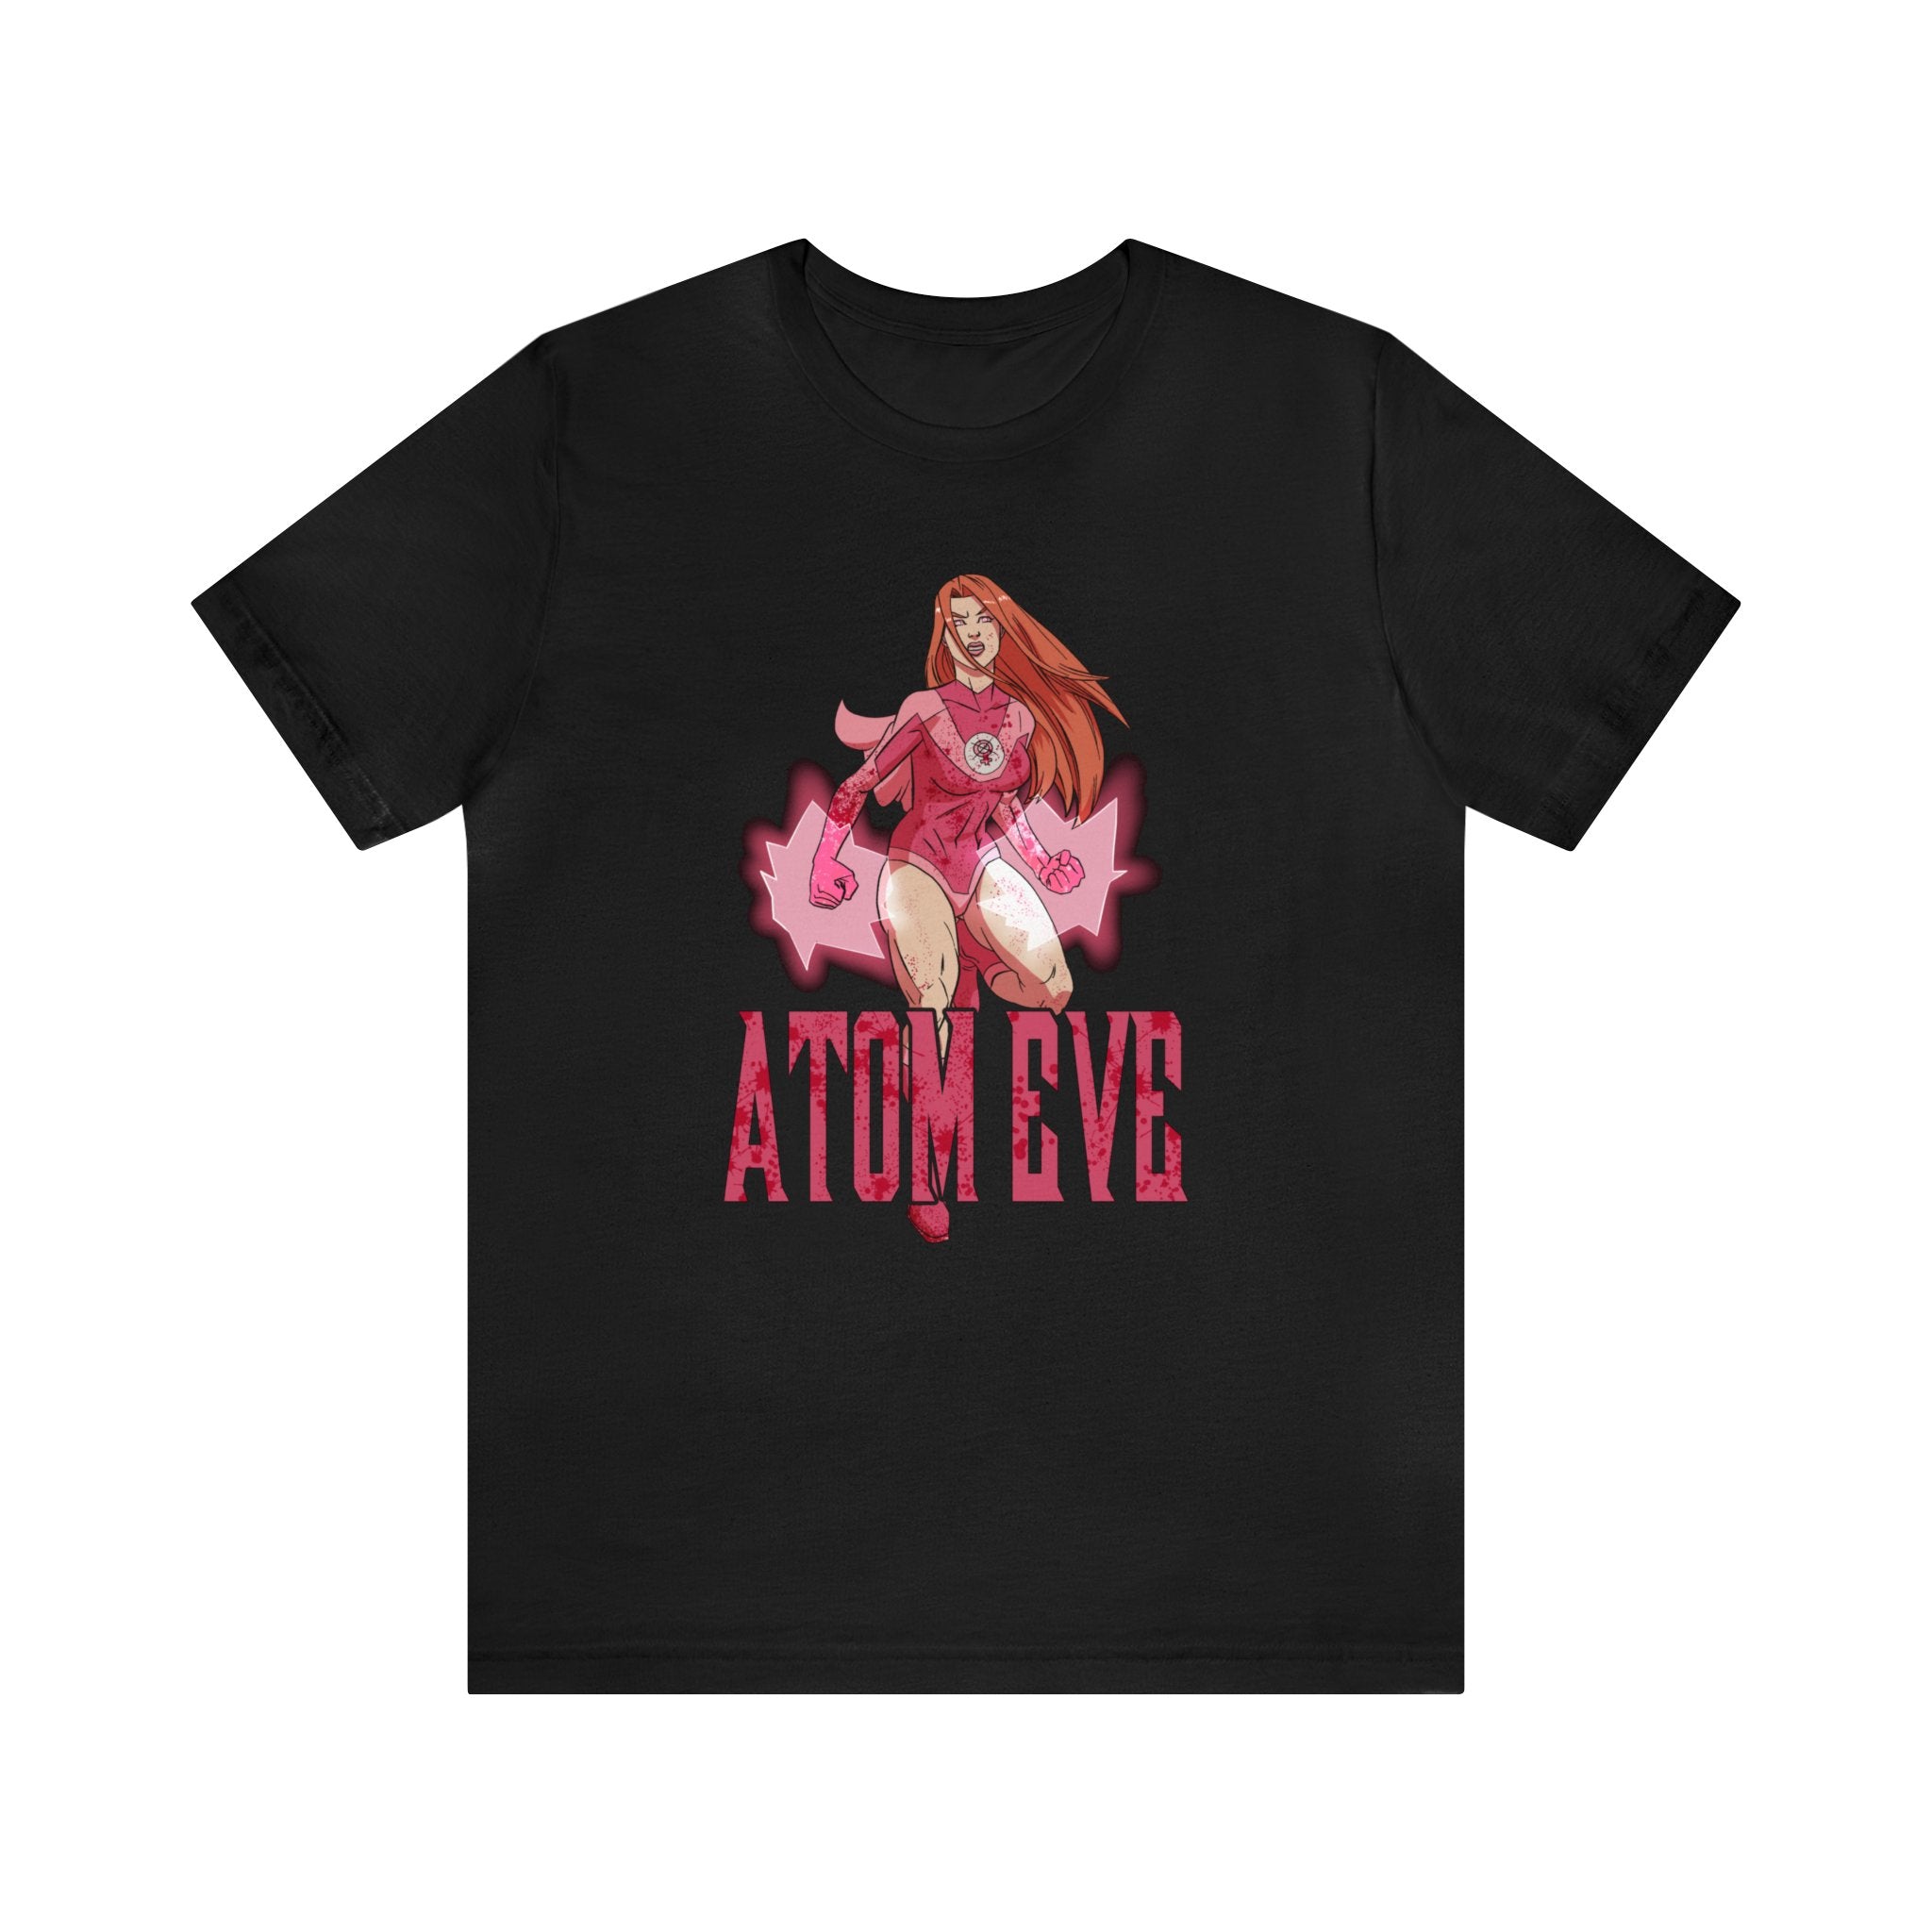 Atom Eve "Creator of Components" (T-shirt)